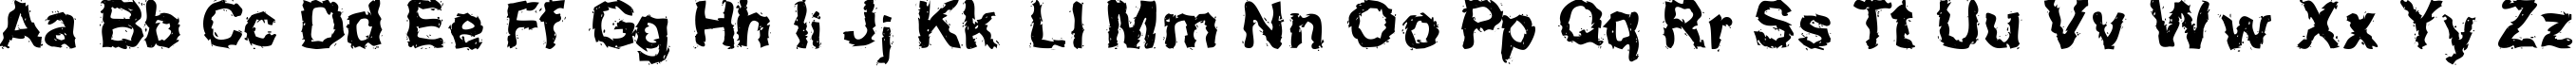 Пример написания английского алфавита шрифтом Inked weird